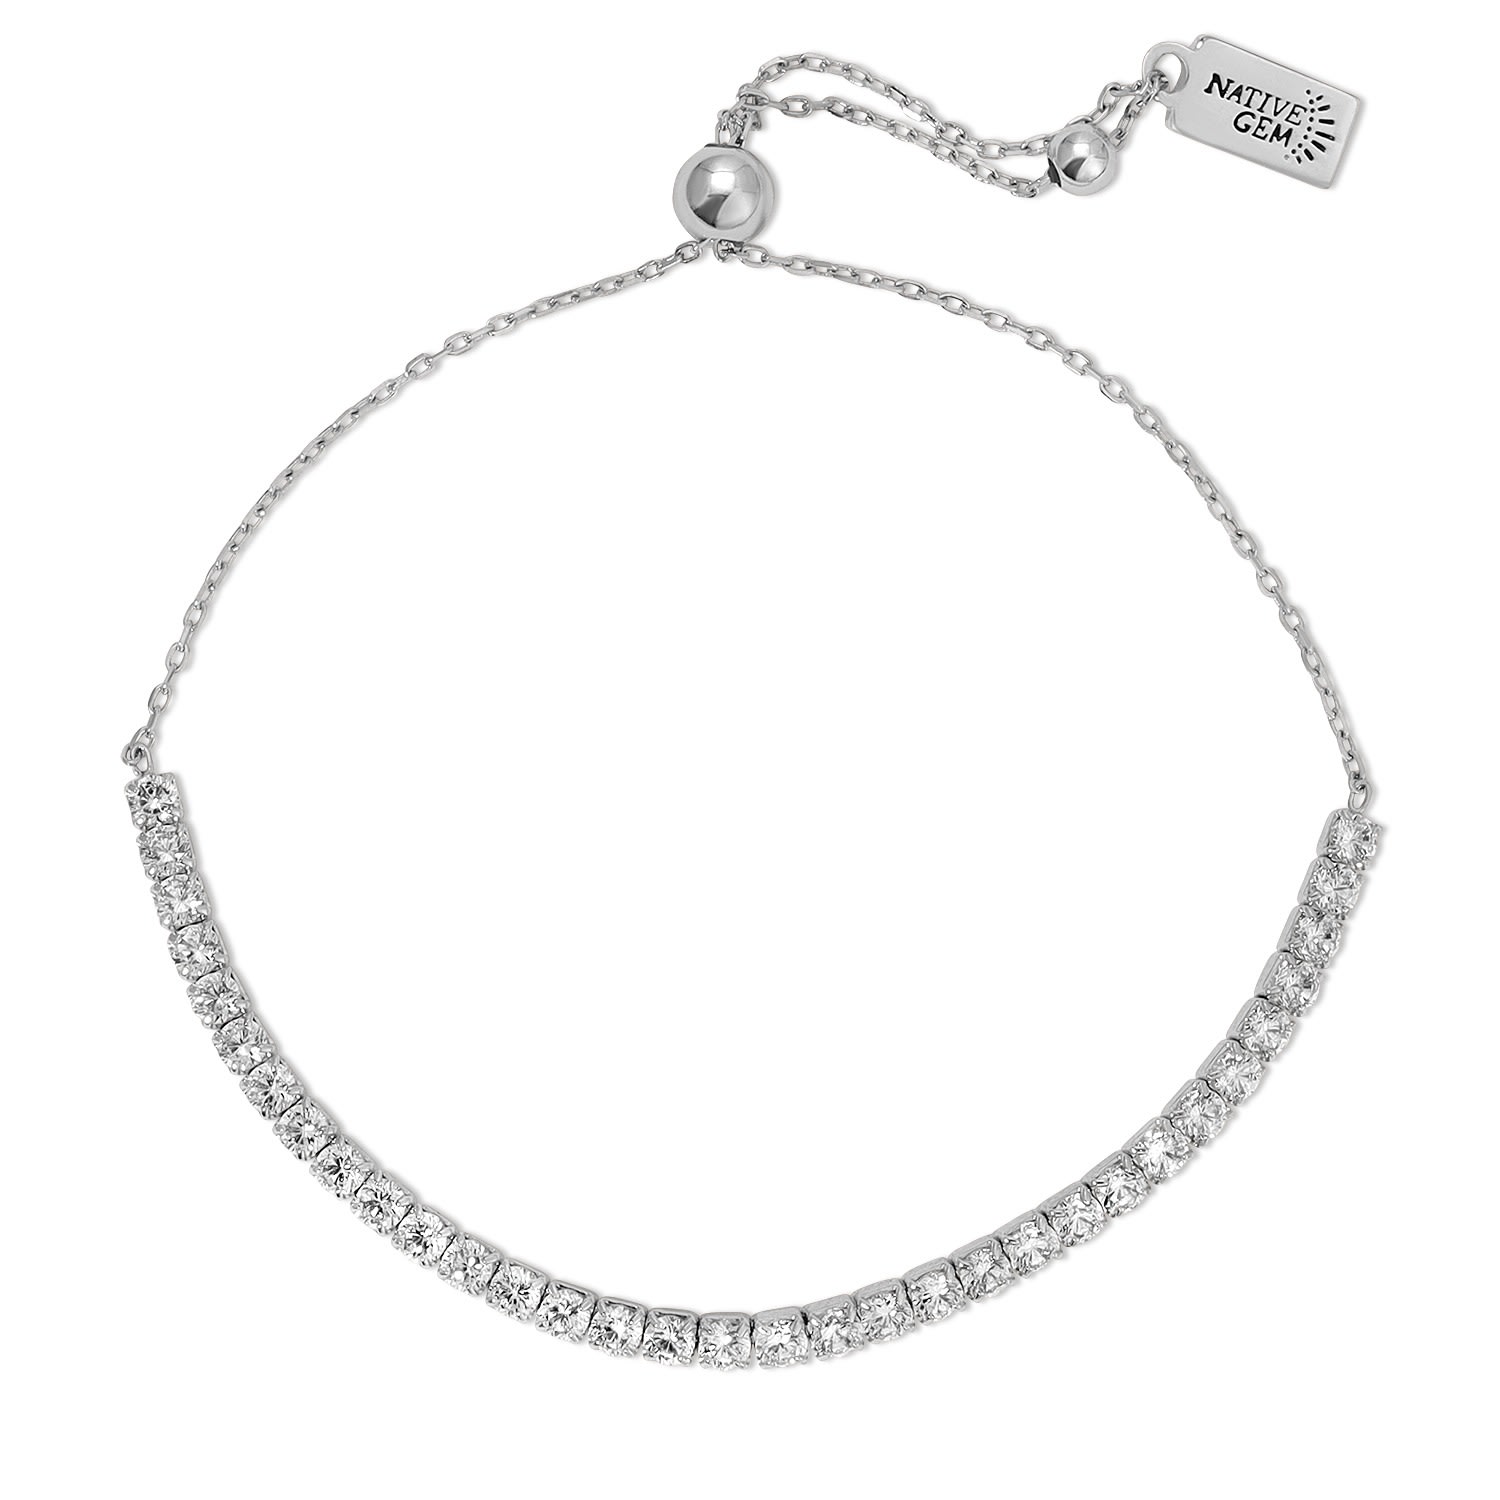 Native Gem Women's Shimmer Tennis Bracelet- Sterling Silver In Gray